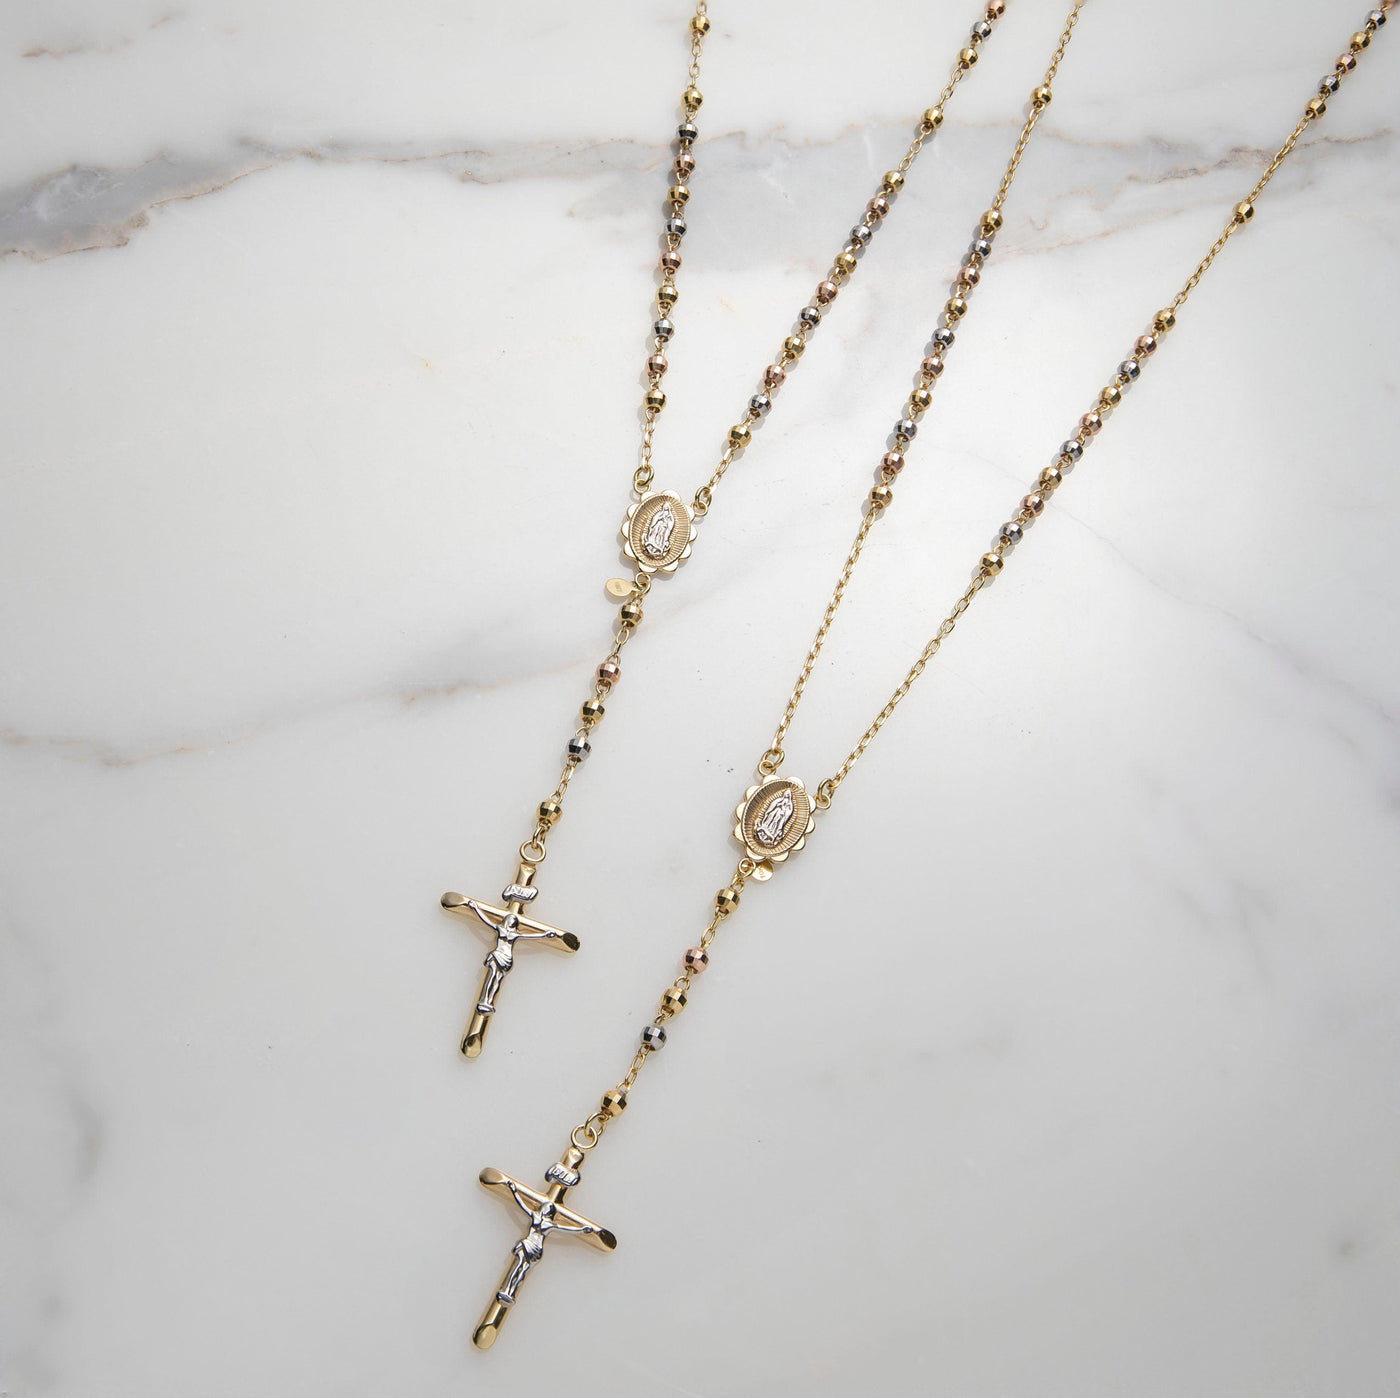 4mm tri color diamond cut cross rosary crucifix necklace 10k tri color gold bayamjewelry 3 bffb4912 5b89 4d21 ac46